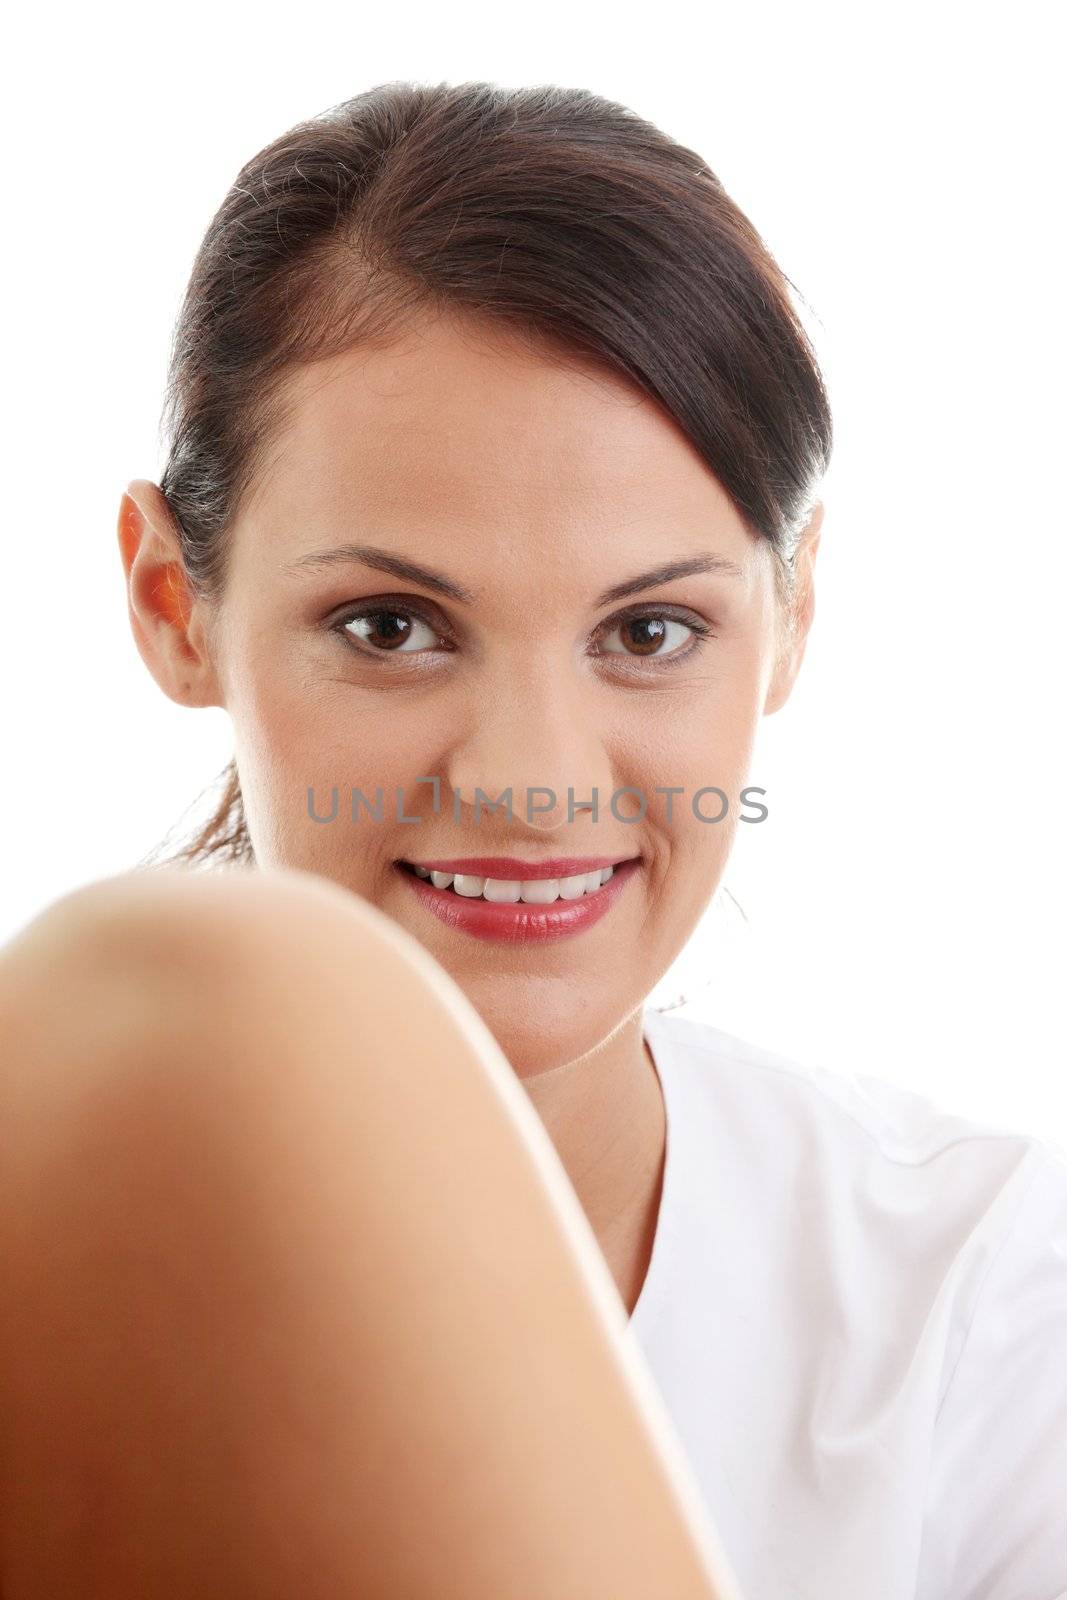 Female gynecologist doctor, isolated on white background